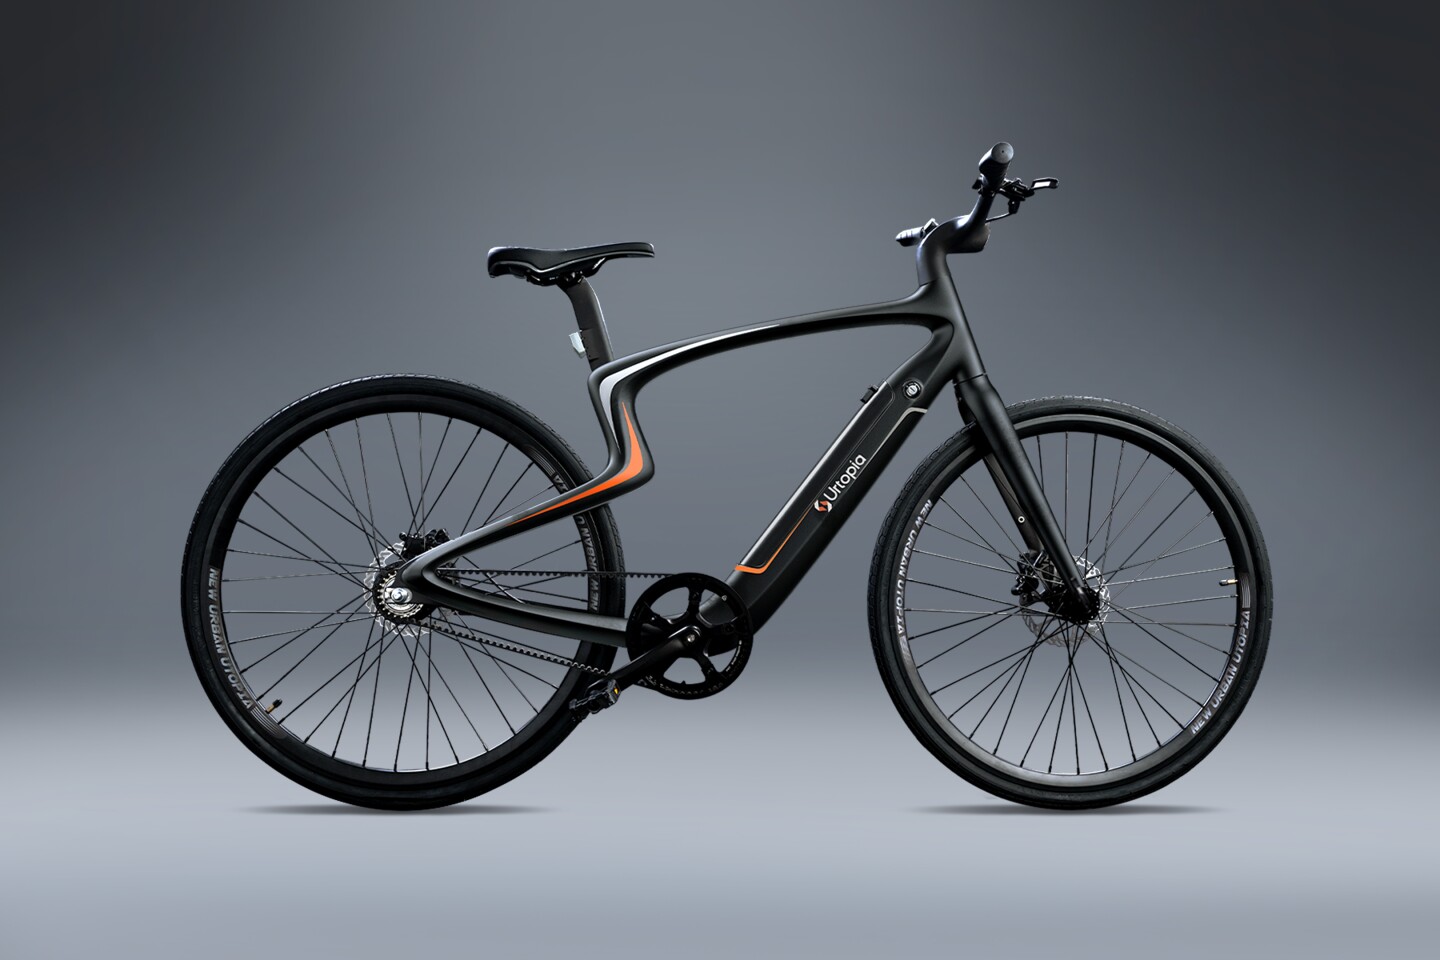 Full-carbon Urban E-Bike 'Urtopia' with Radar, Voice Control and GPS